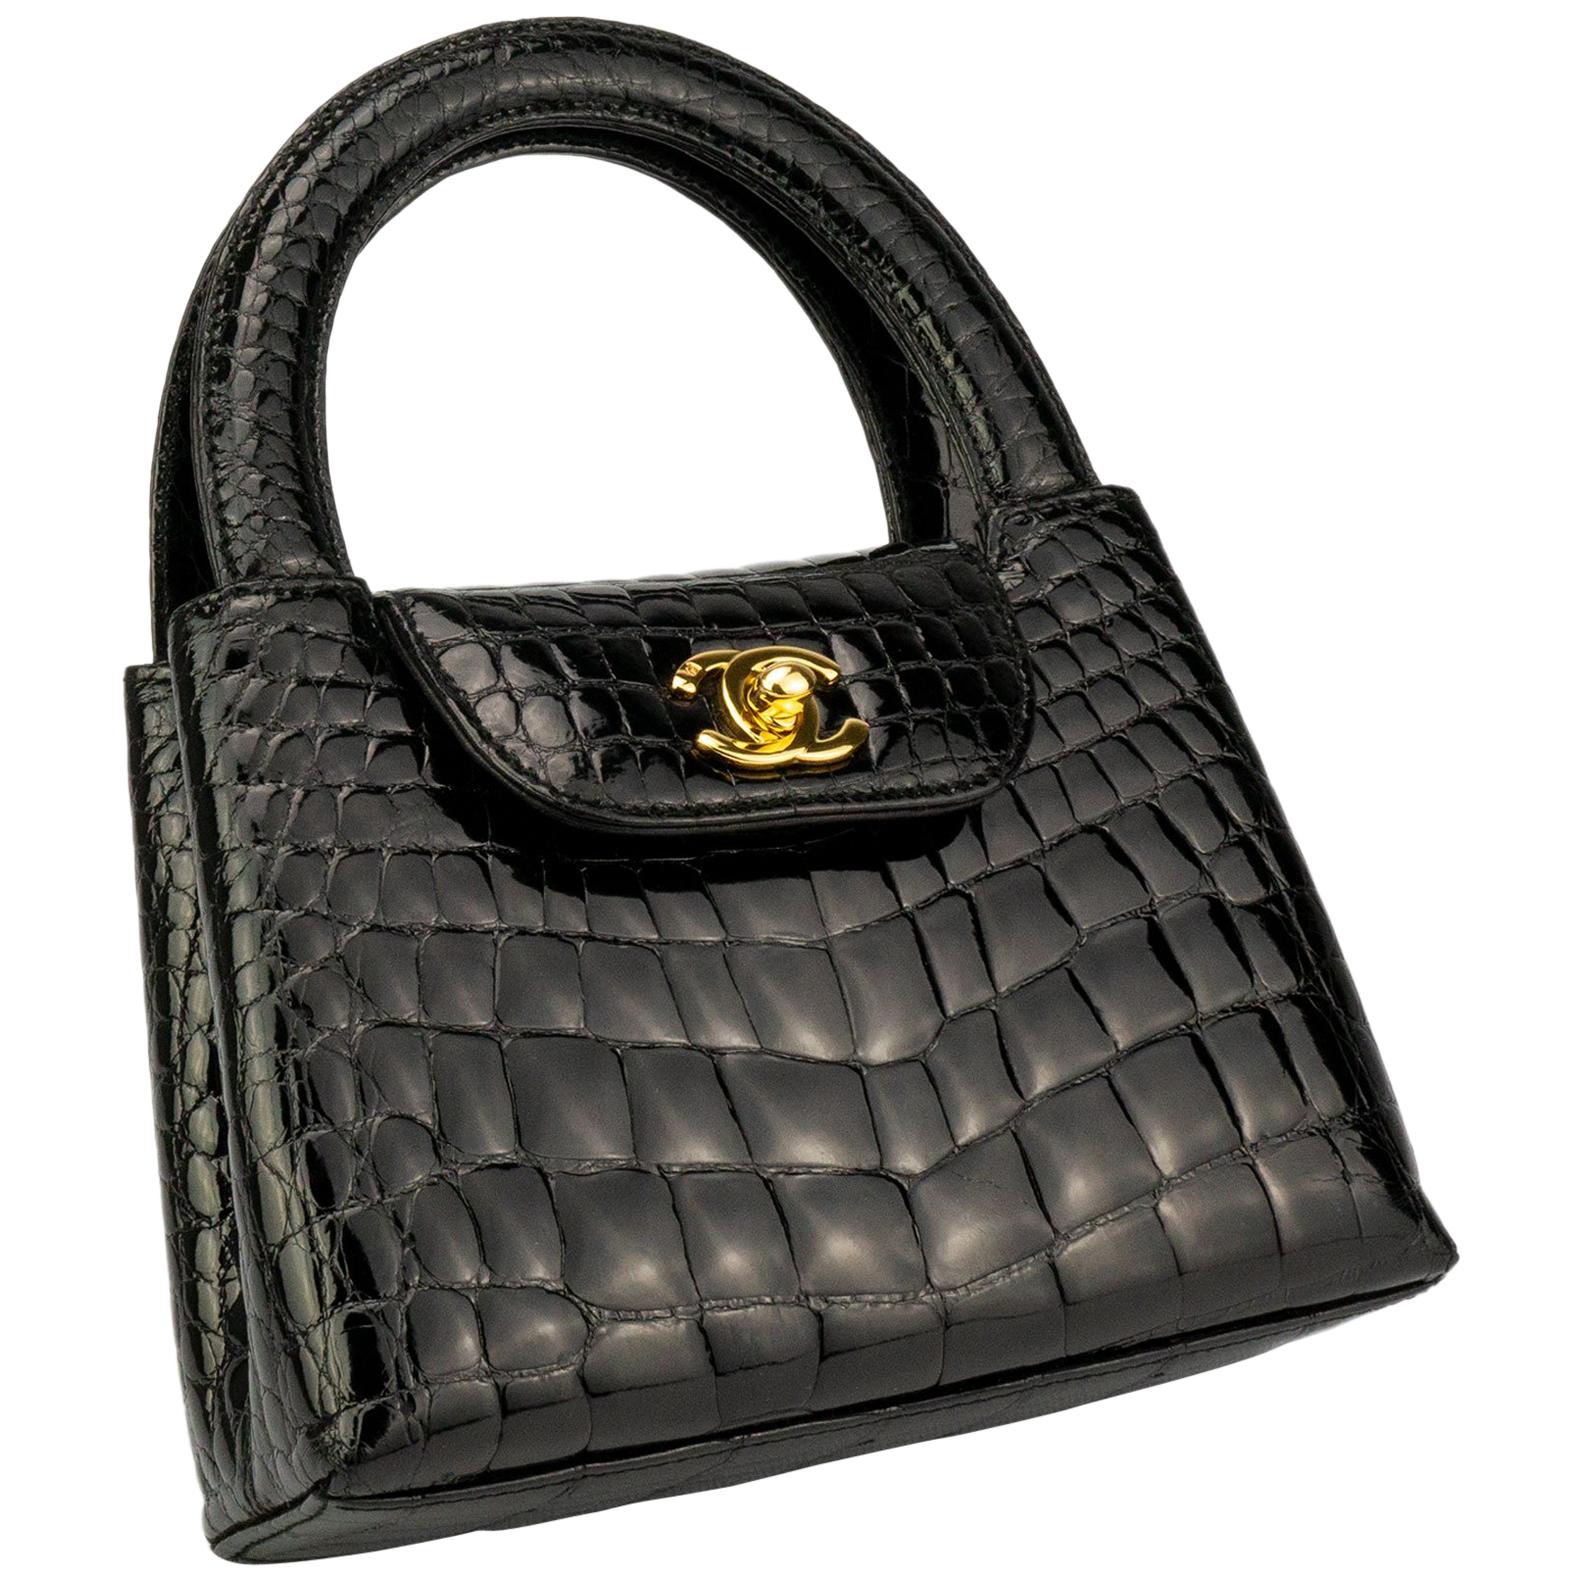 Chanel Kelly Handbag  85 For Sale on 1stDibs  chanel kelly bag chanel  hermès kelly handbags  purses vintage chanel kelly bag